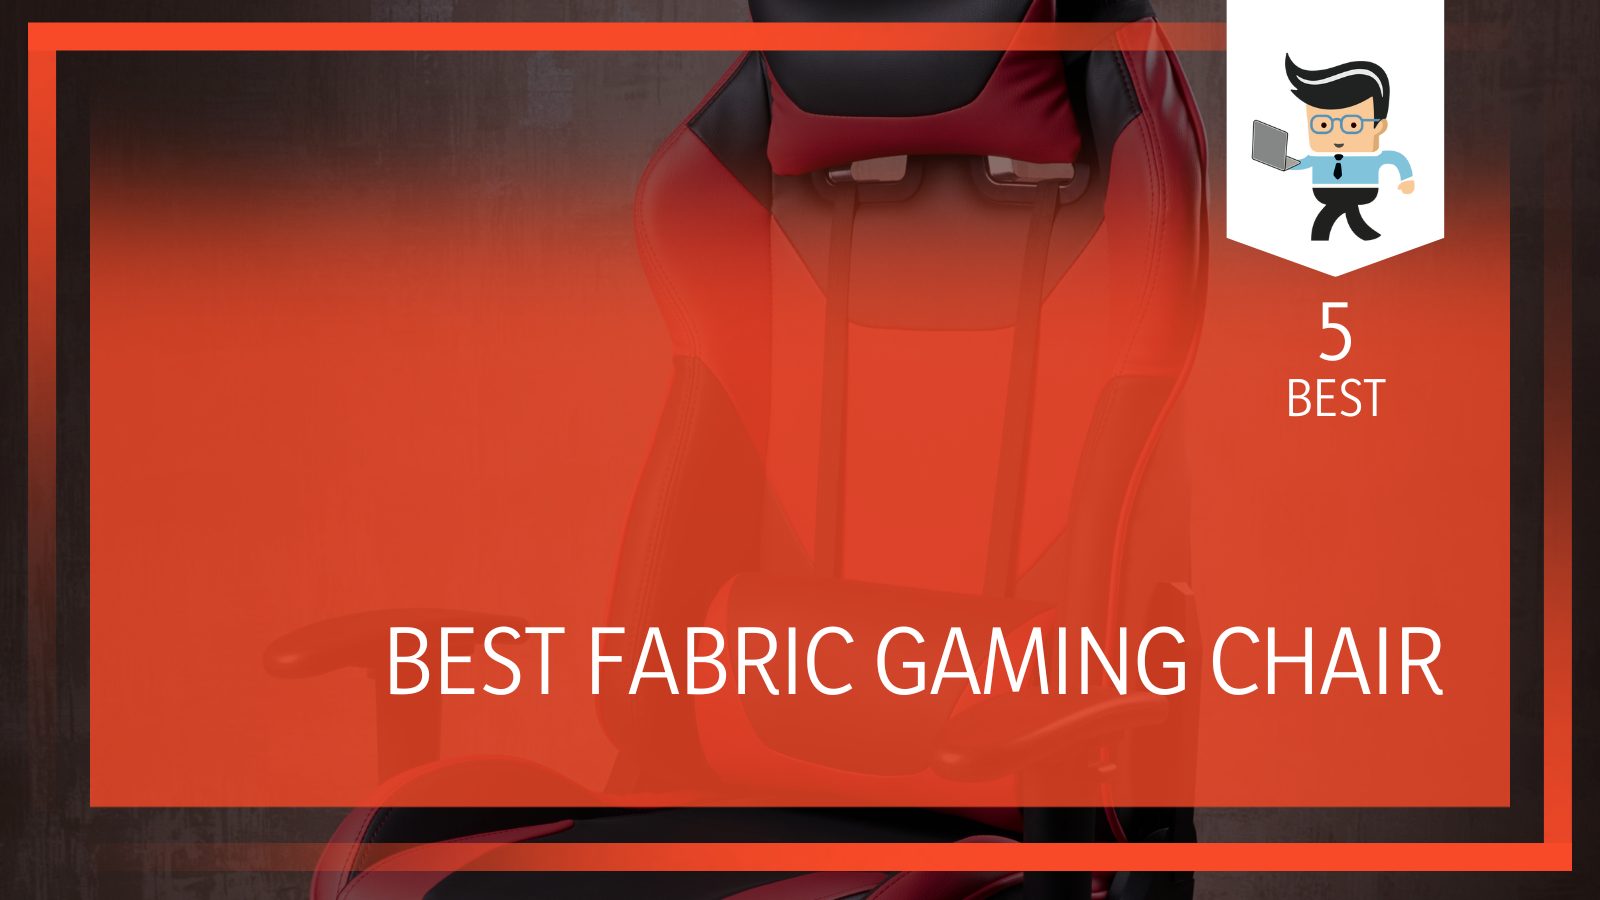 Fabric Gaming Chair Characteristics